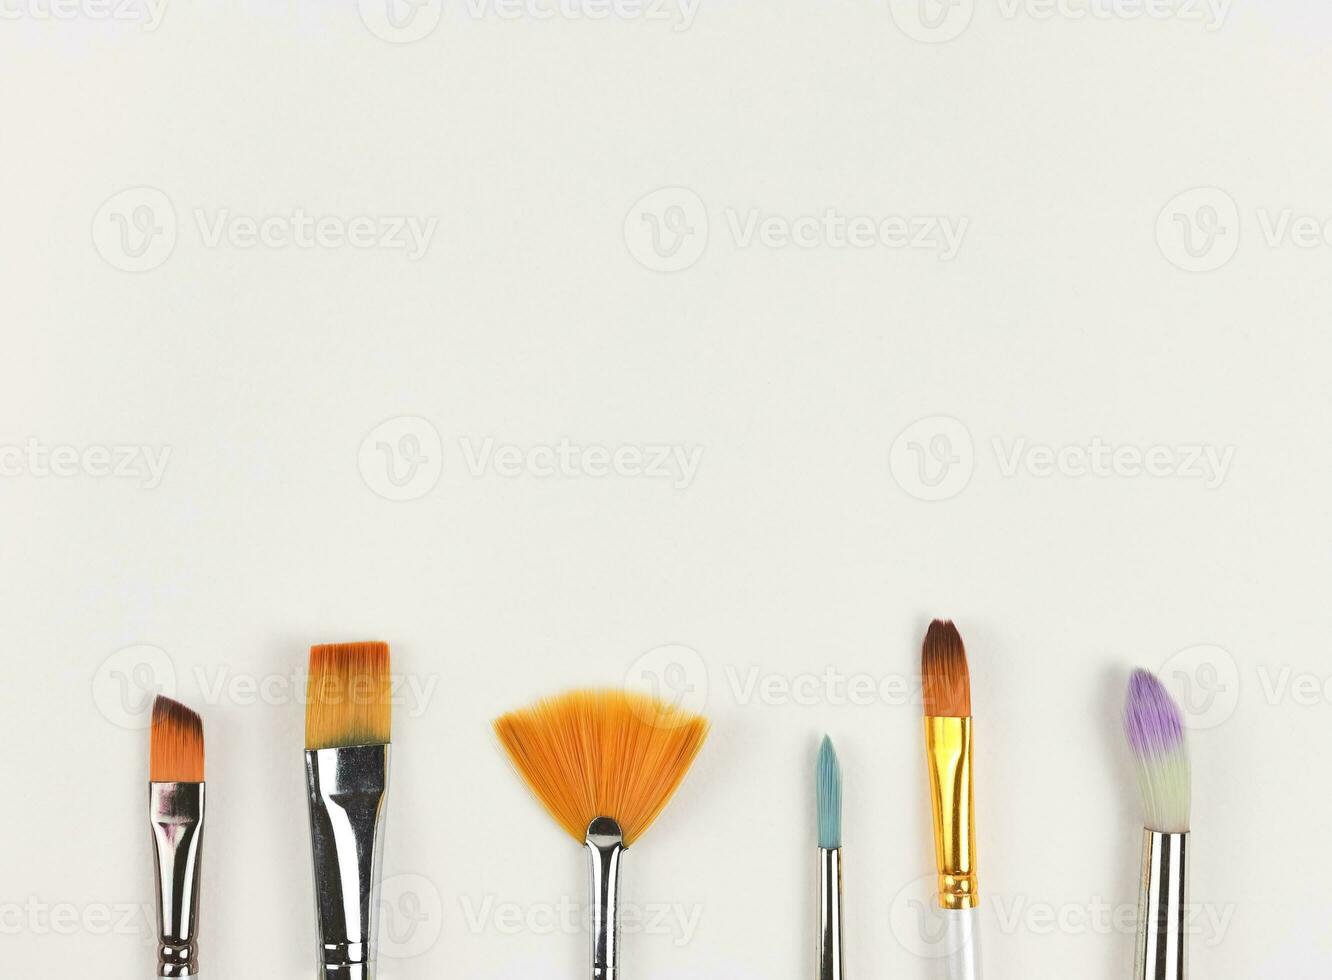 plano laico de diferente tipo de pintar cepillos aislado en blanco antecedentes. artista accesorios. foto